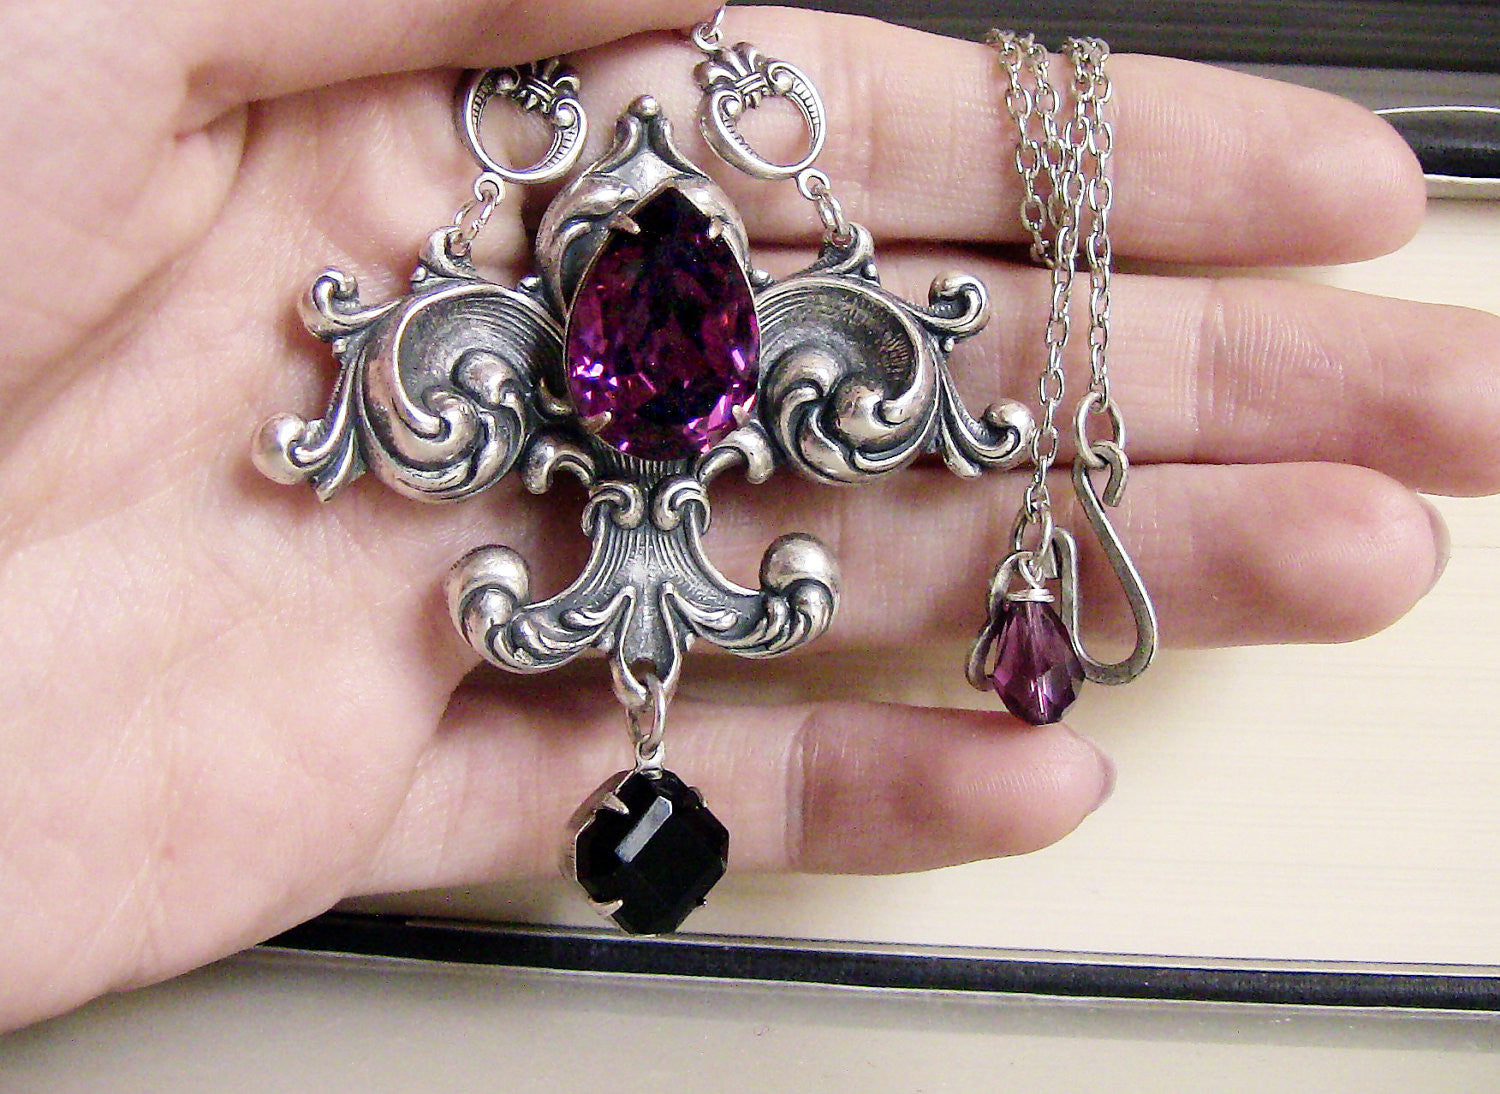 Fleur De Lys Necklace with Black and Purple Swarovski Crystals - Aranwen's Jewelry
 - 3